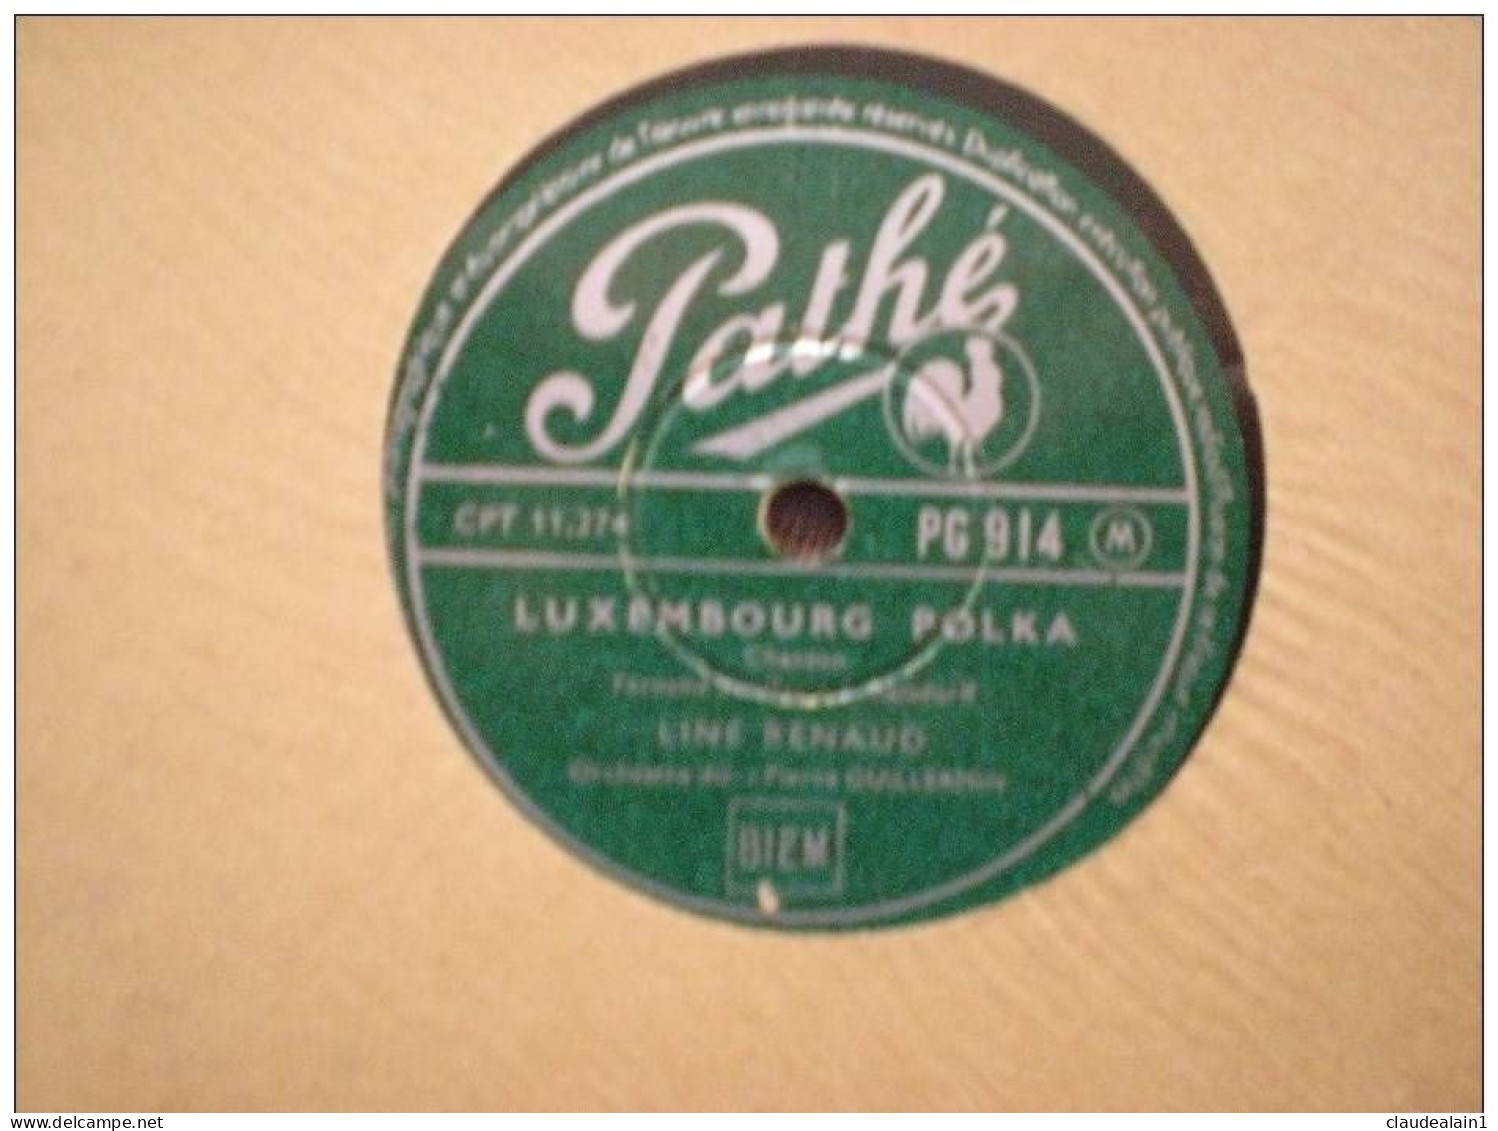 DISQUE PATHE VINYLE 78T - LINE RENAUD - LUXEMBOURG POLKA - PROTEGE-MOI - 78 T - Discos Para Fonógrafos